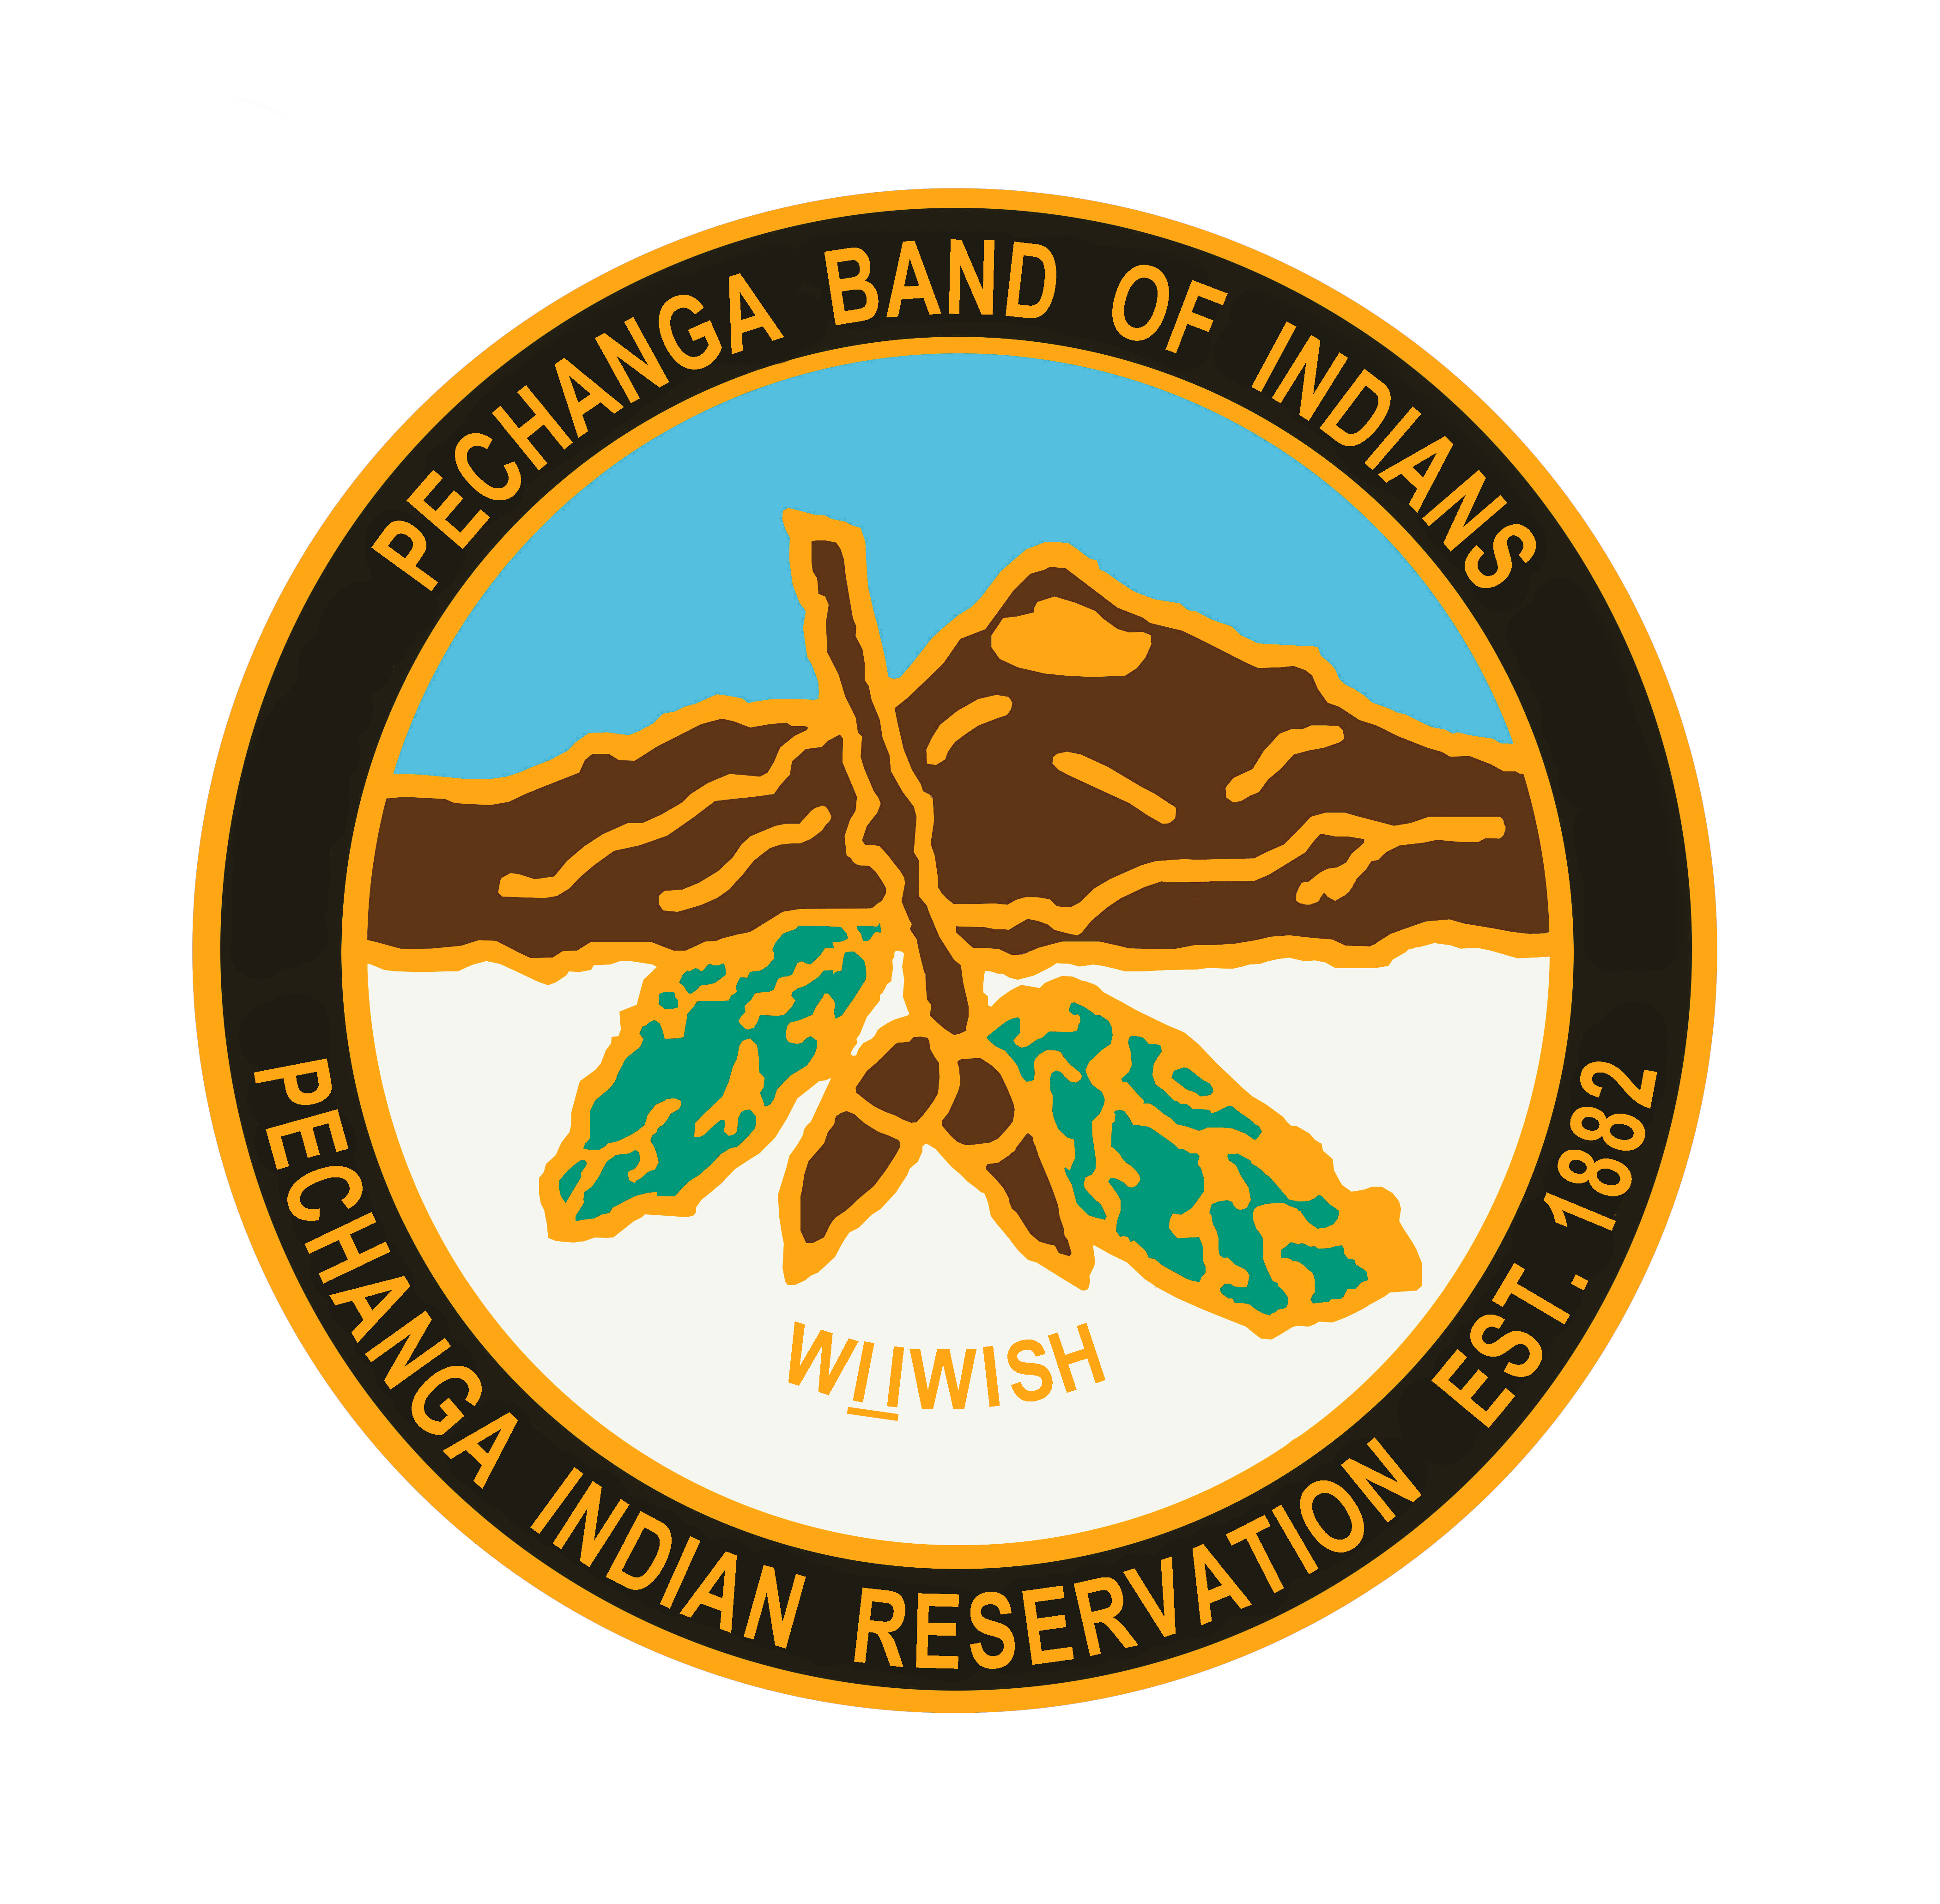 Pechanga Reservation Temecula Band of Mission Indians Logo